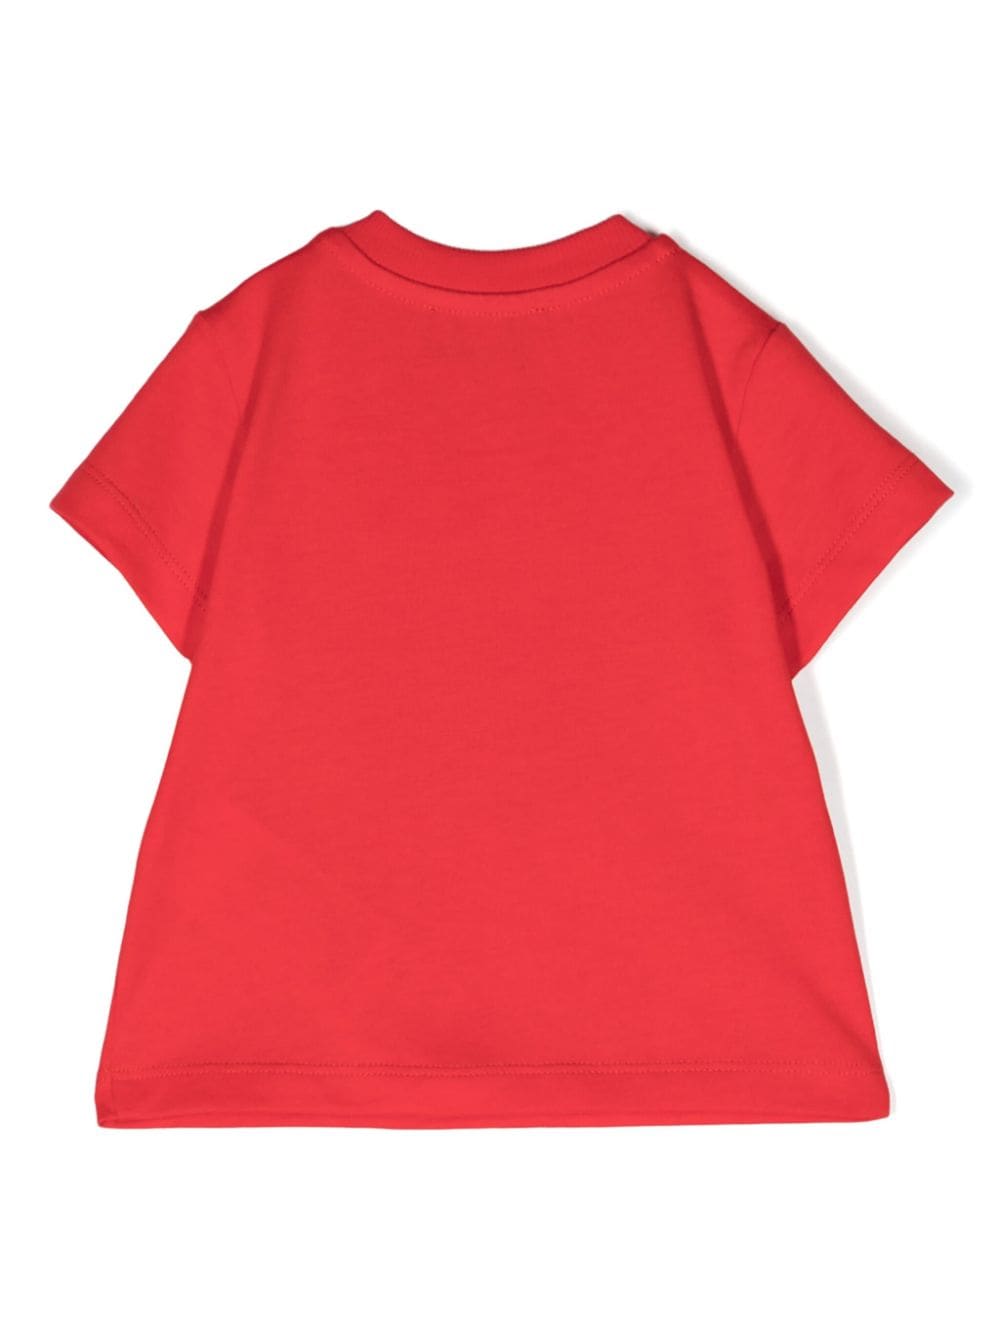 T-shirt rossa stampa Teddy Bear